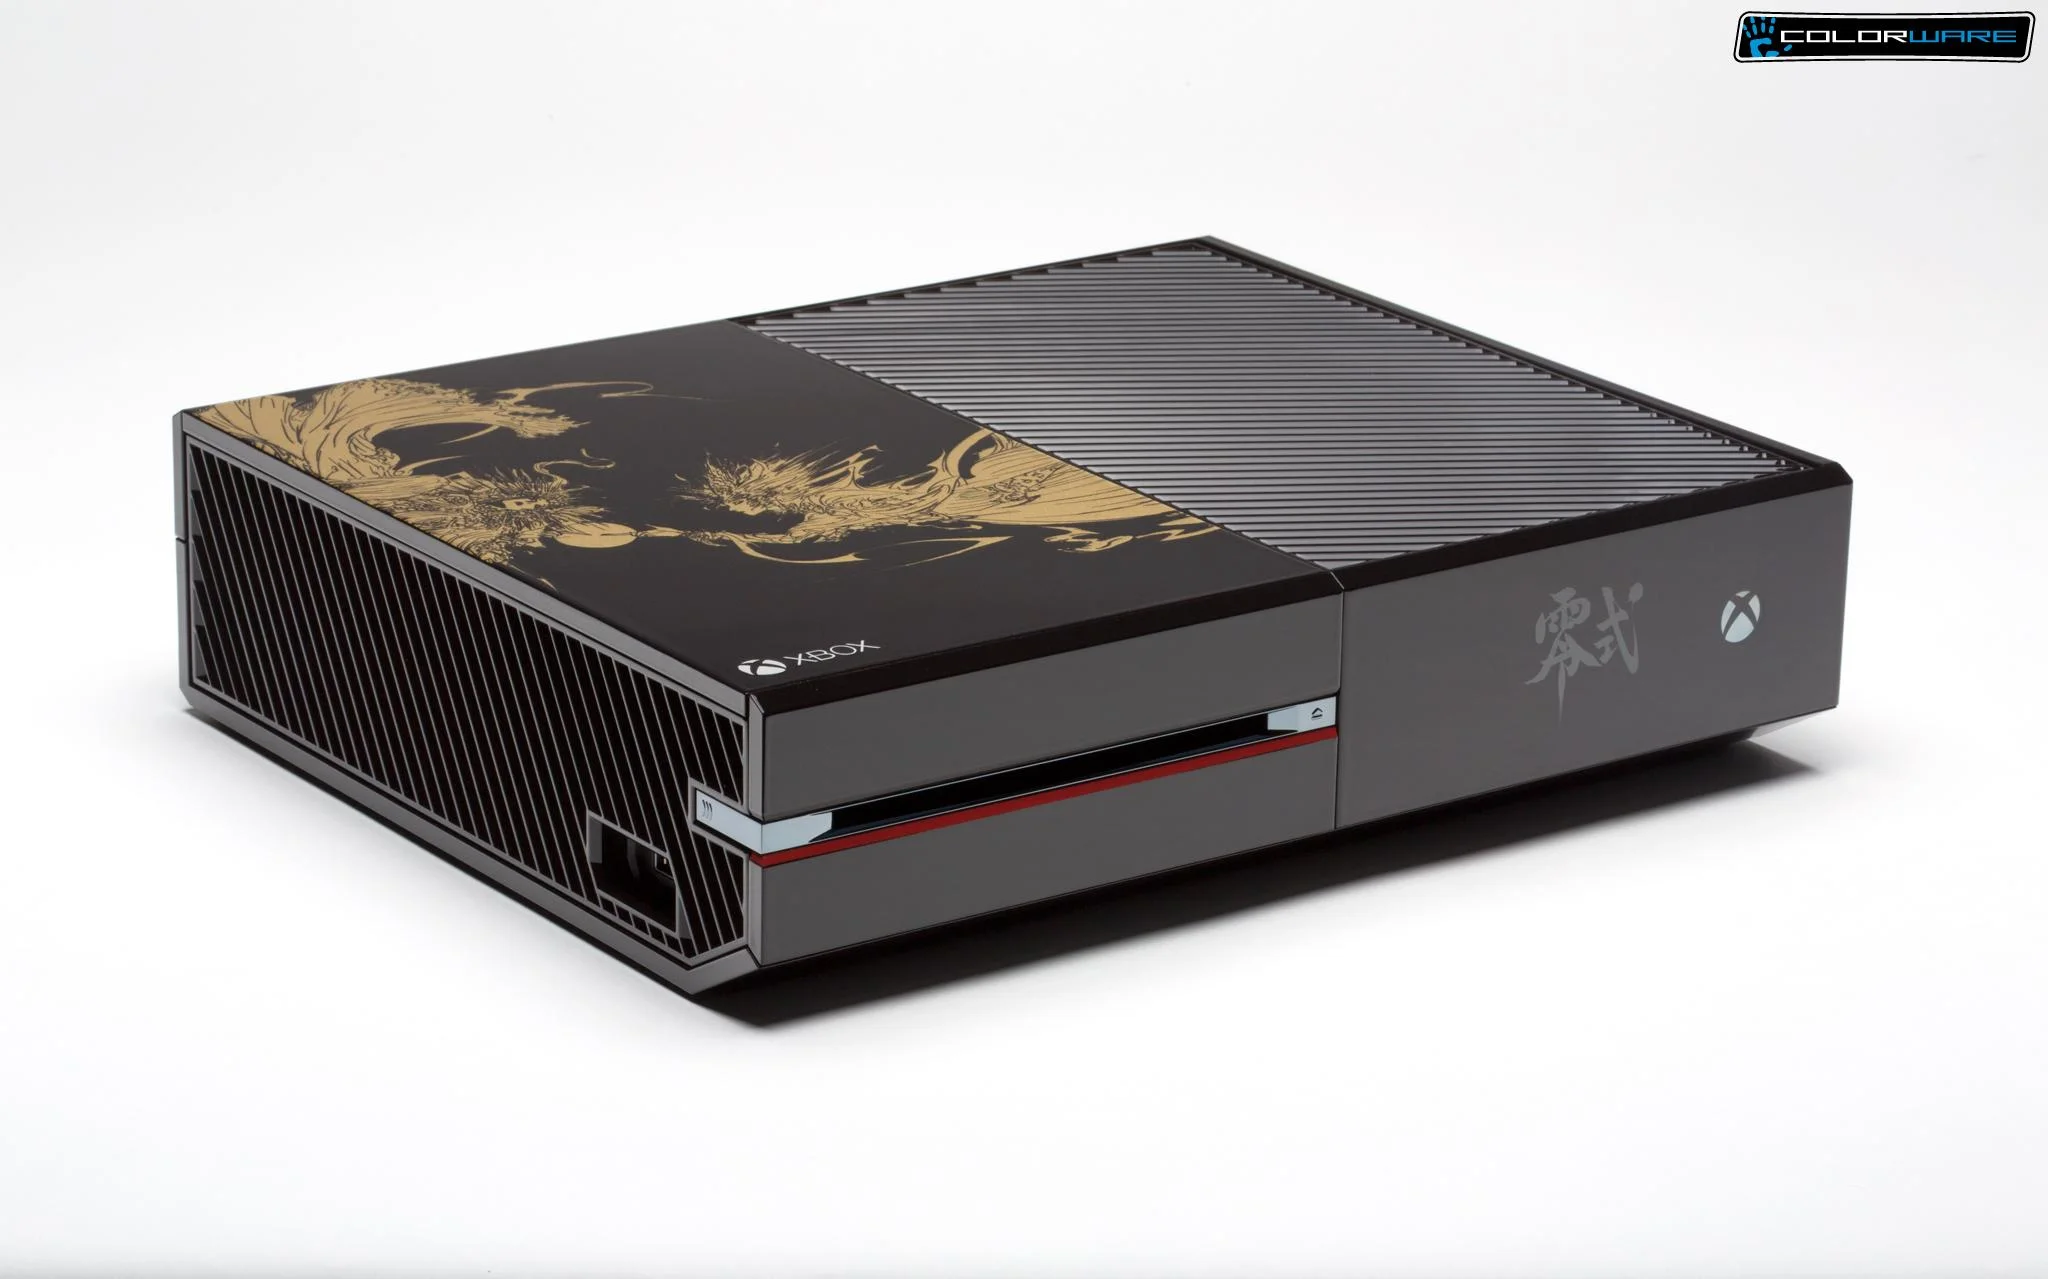  Microsoft Xbox One Final Fantasy Type 0 Console